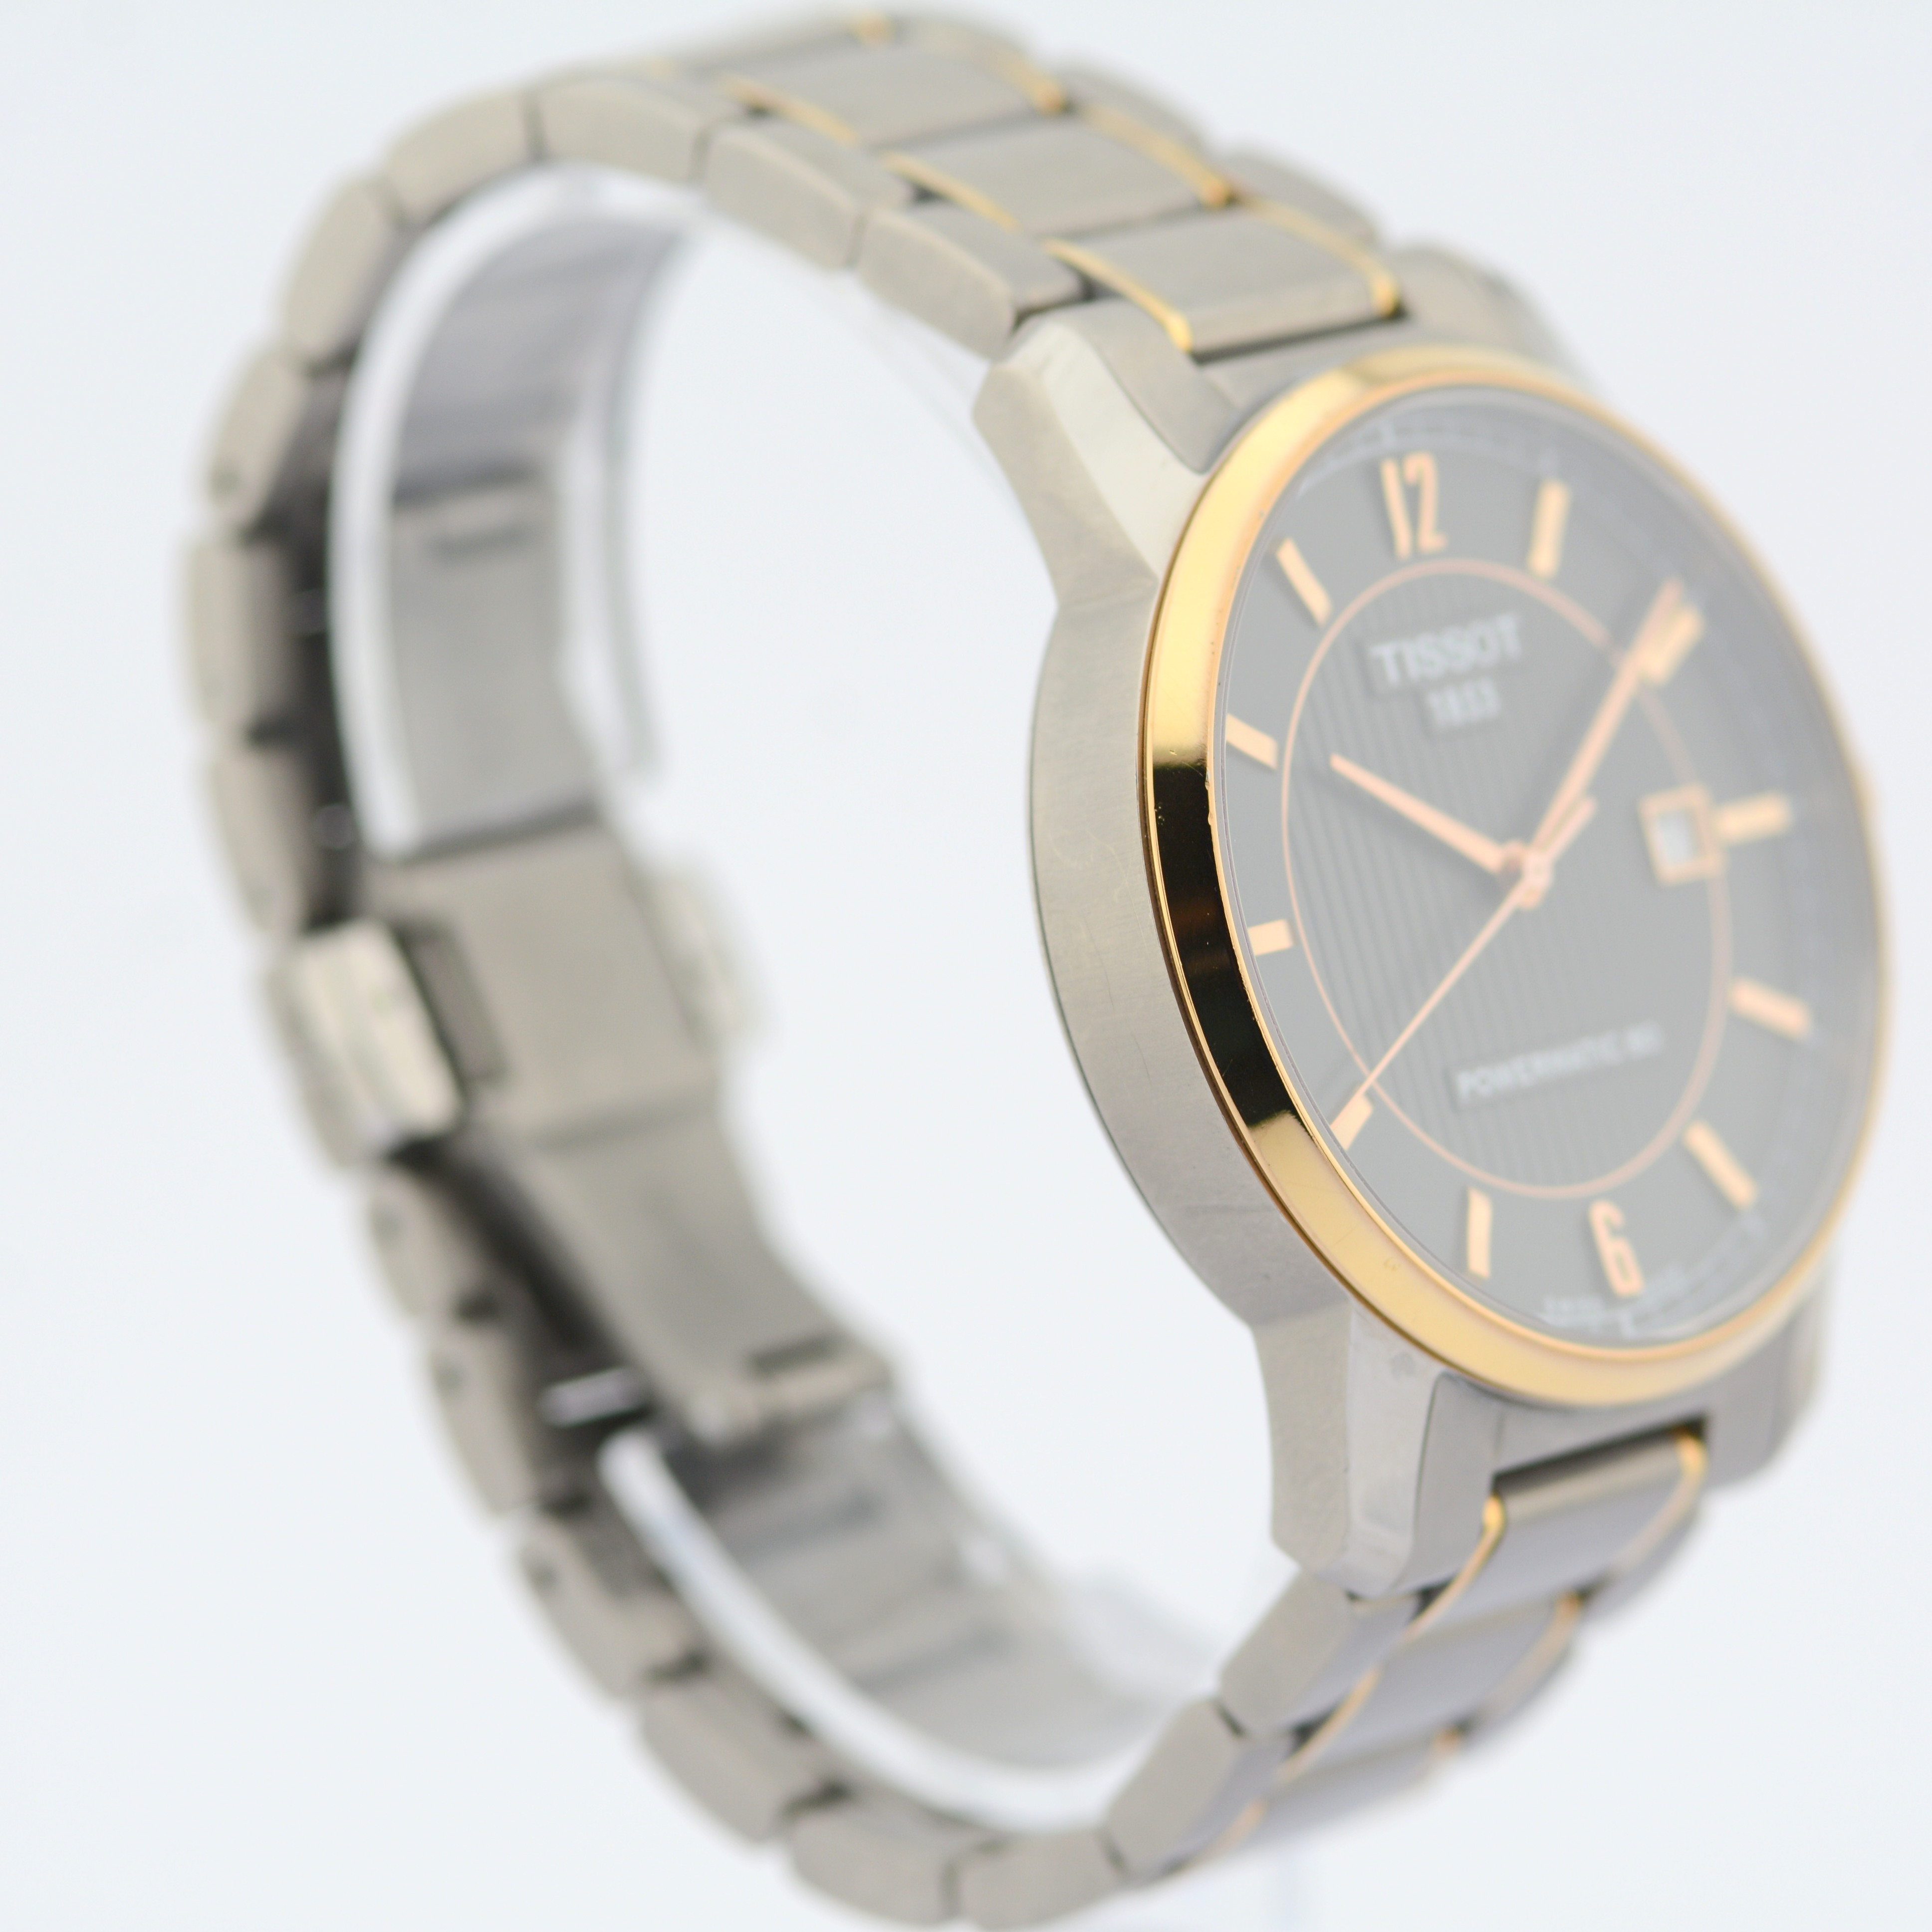 Tissot / Powermatic 80 Date - Automatic - Titanium - Gentlmen's Steel Wrist Watch - Image 4 of 9